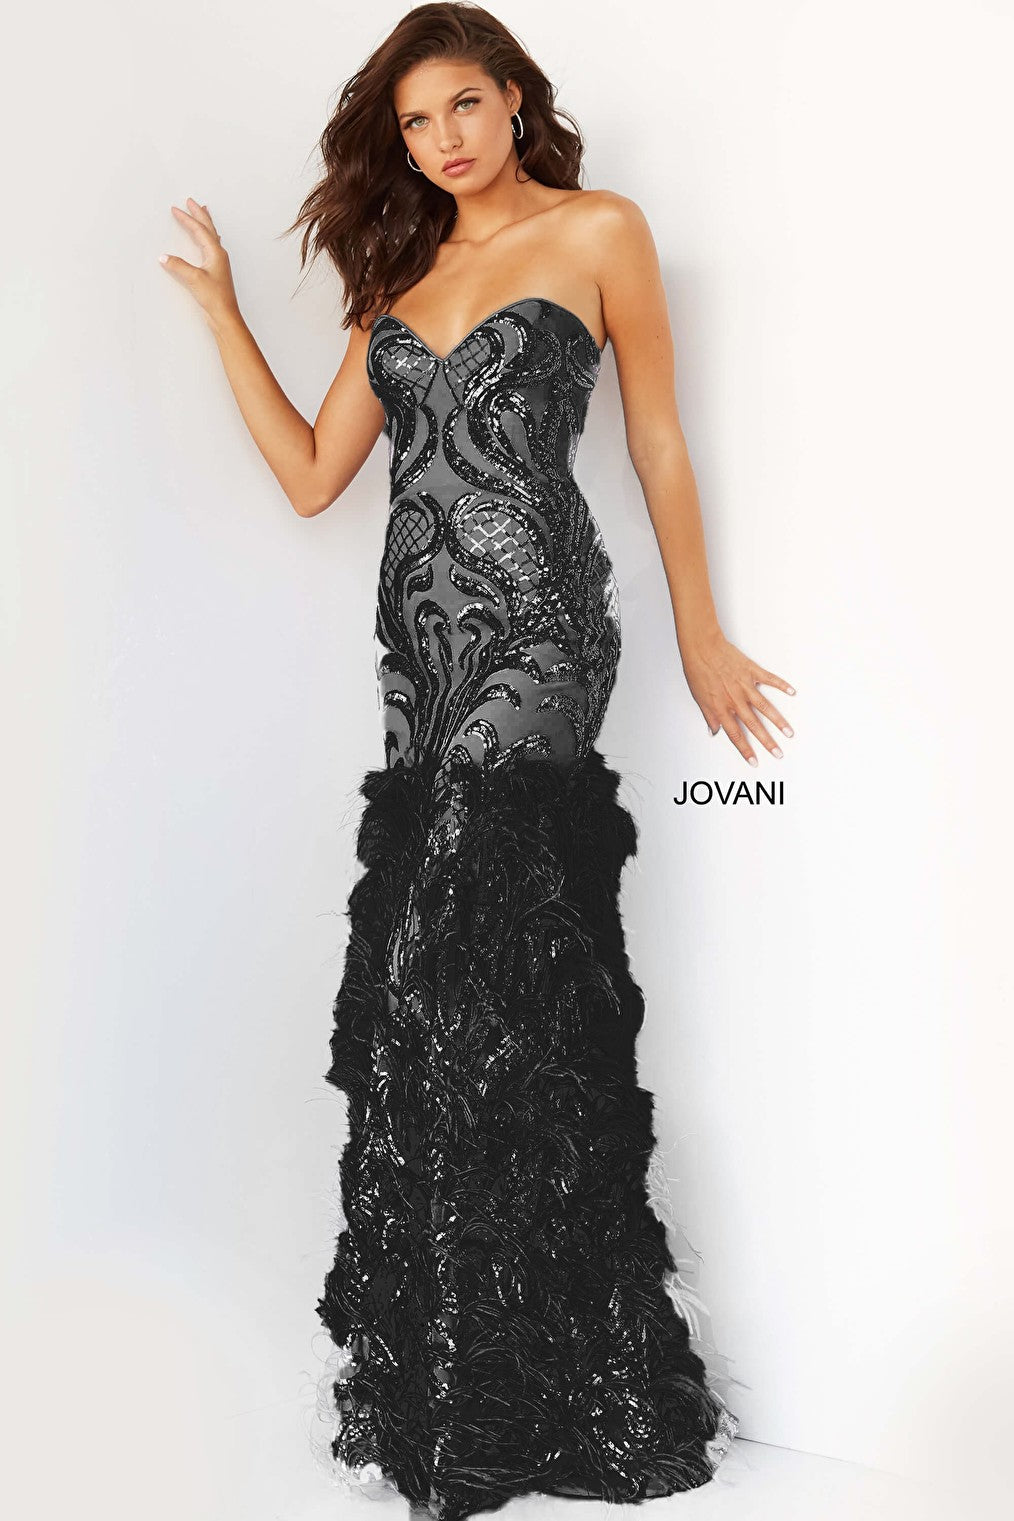 black feather dress https://www.jovani.com/prom-dresses/jovani-05667-strapless-sweetheart-neck-embellished-prom-dress